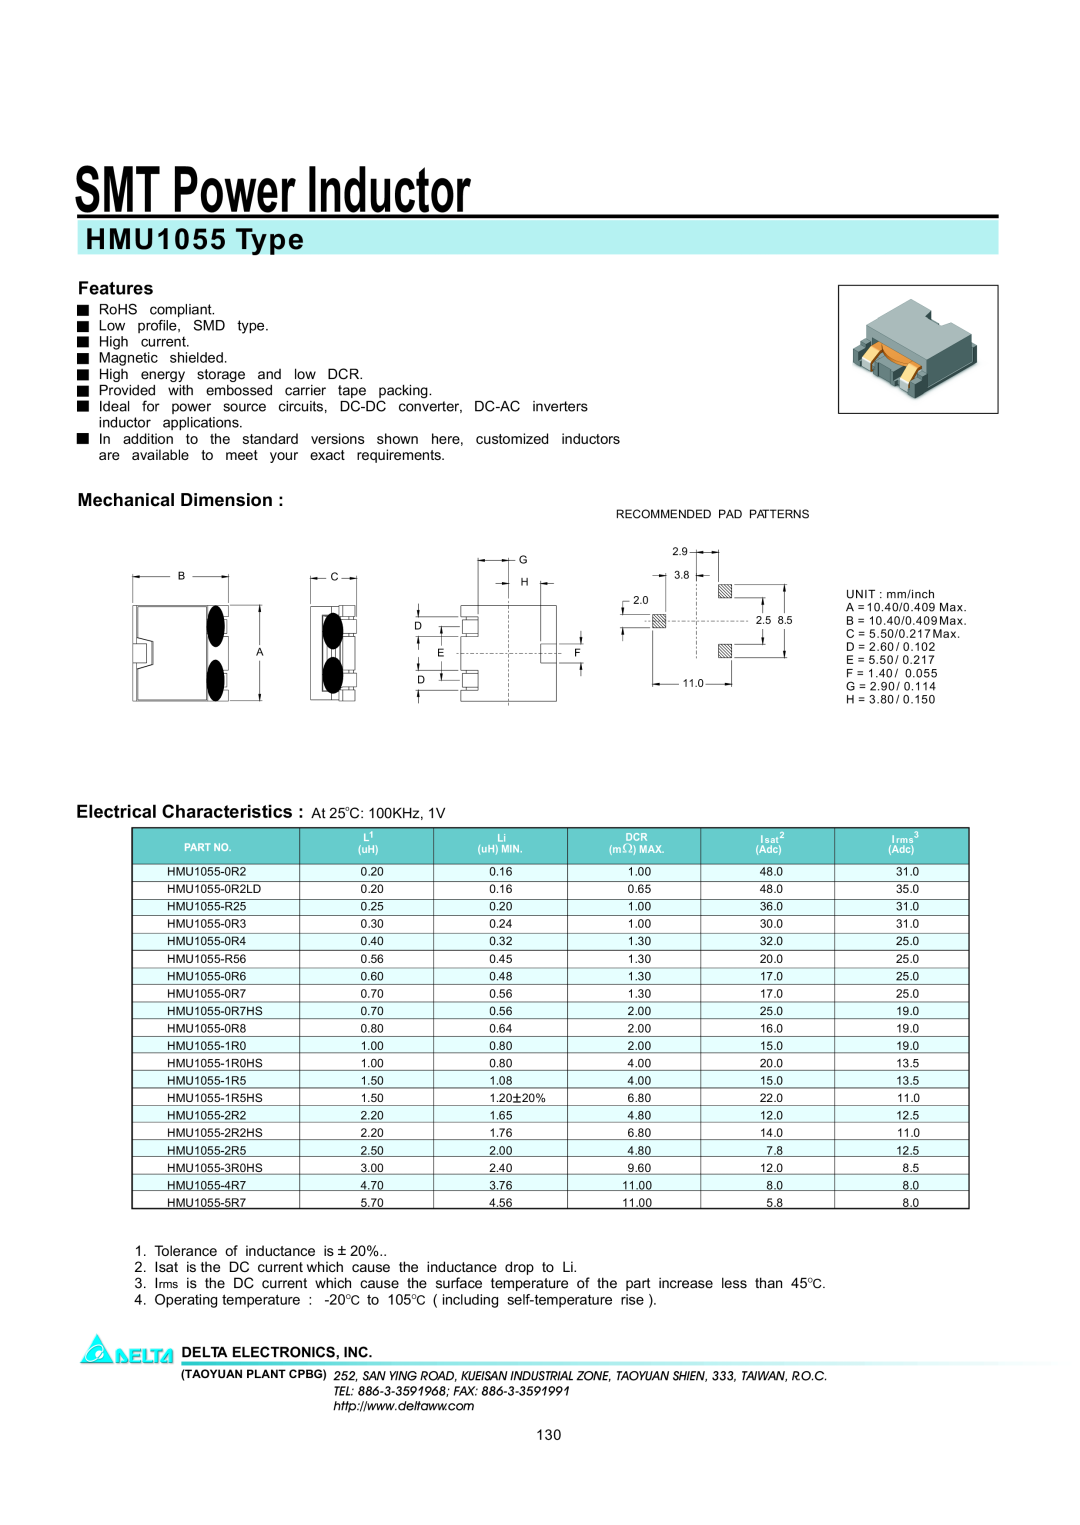 Delta Electronics manual SMT Power Inductor, HMU1055 Type, Features, Mechanical Dimension, Delta Electronics, Inc 